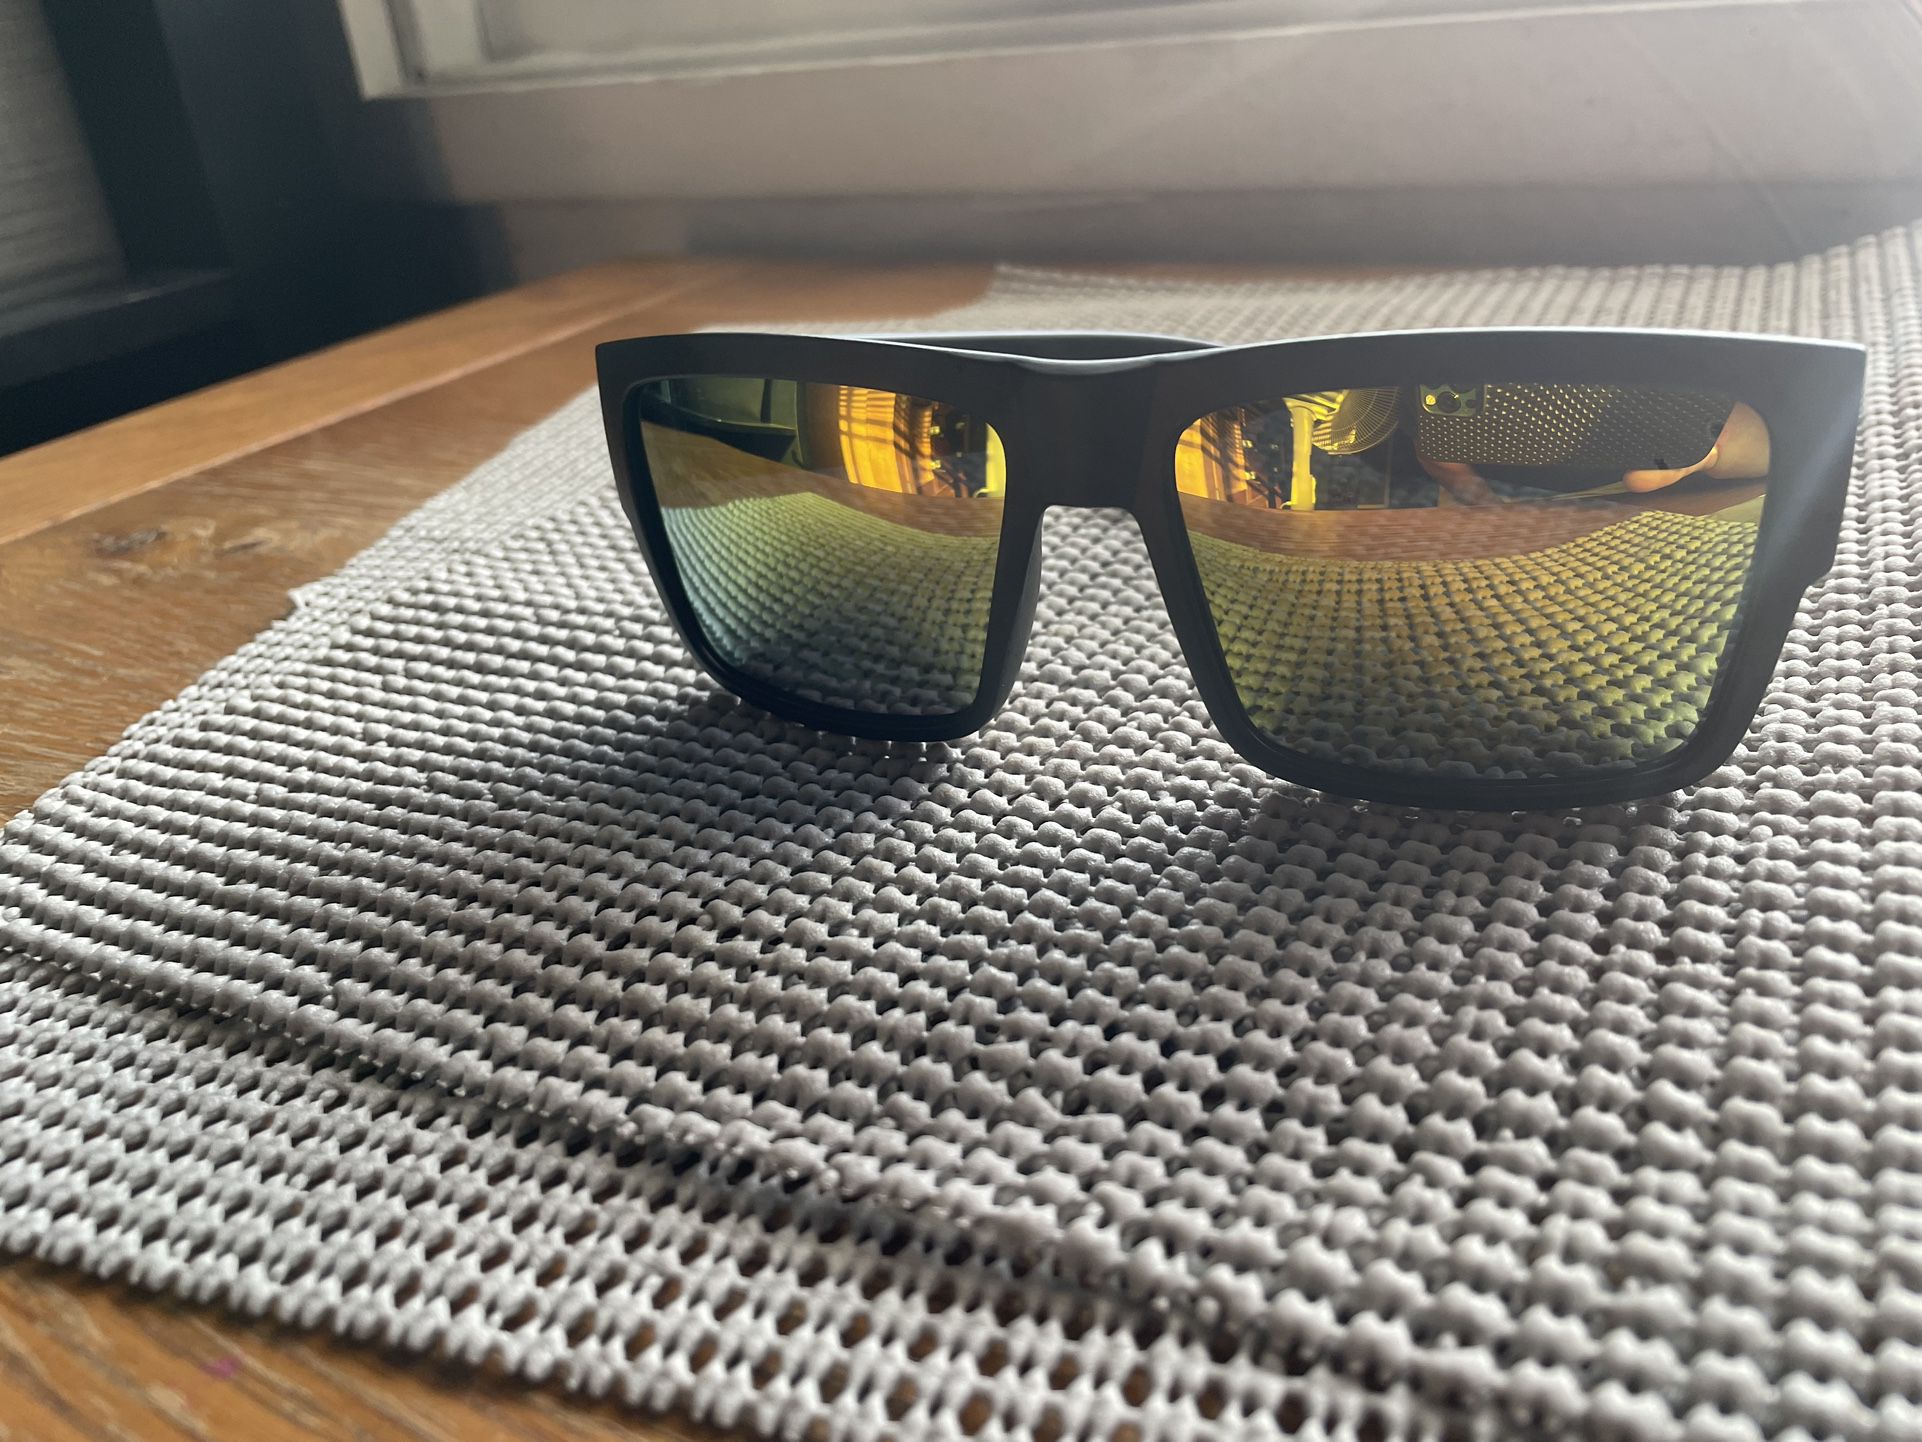 Spy Sunglasses 